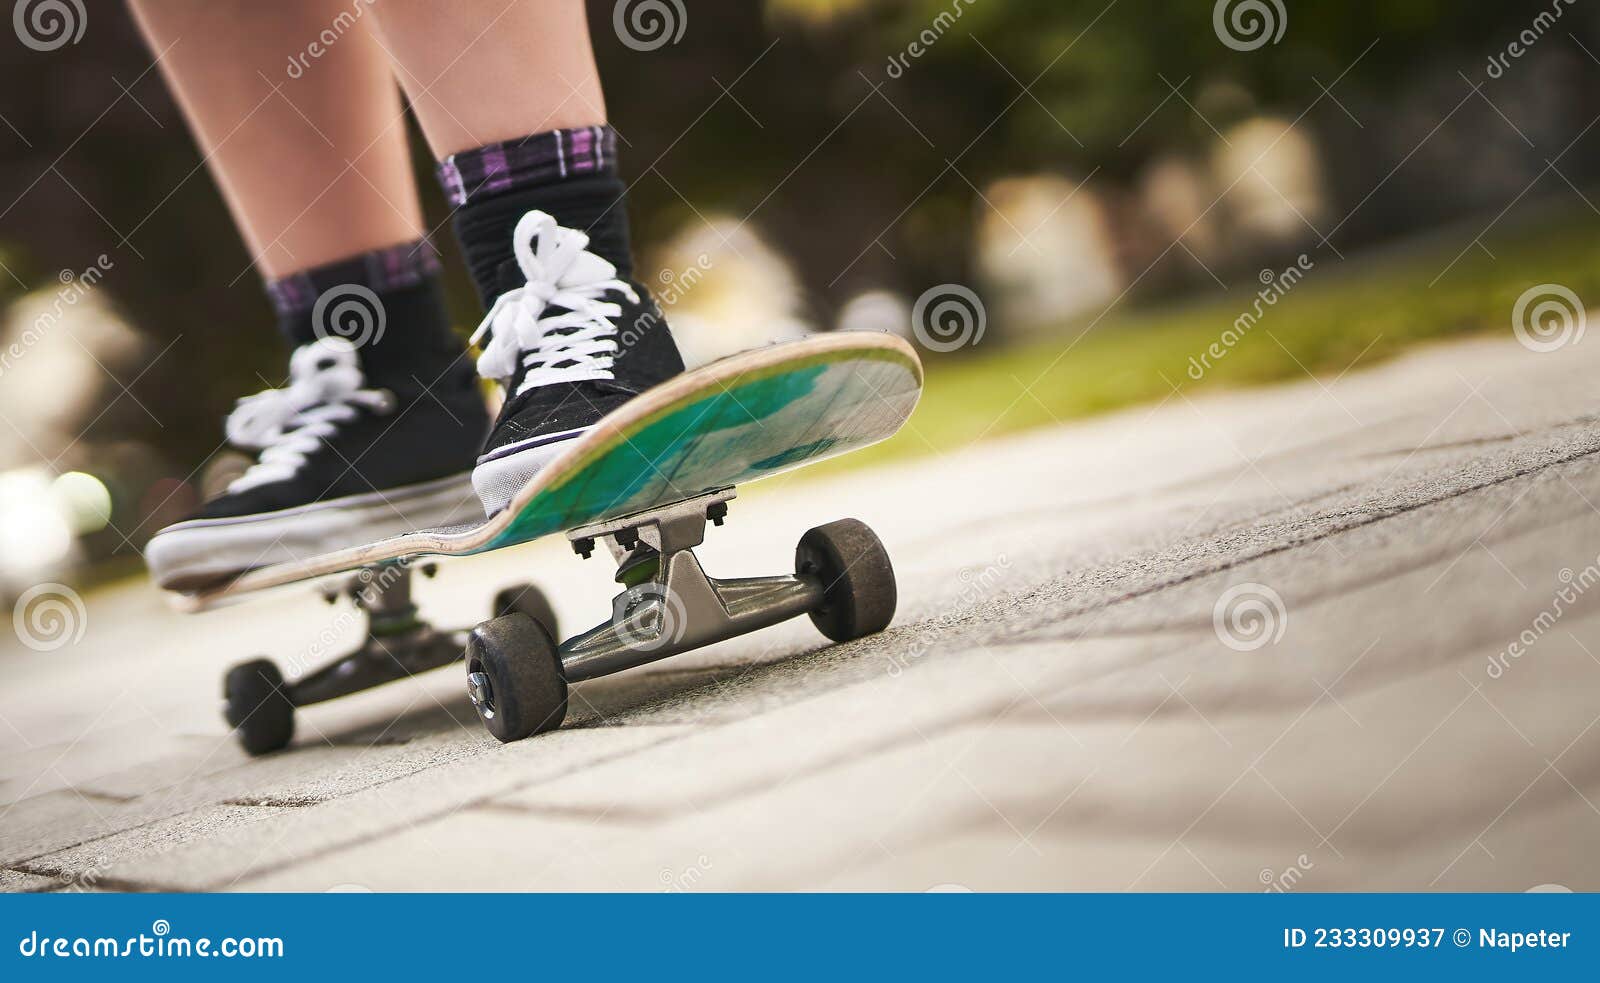 https://thumbs.dreamstime.com/z/unrecognizable-teenager-girl-skateboarding-road-park-wanderlust-skateboarder-outdoor-lifestyle-concept-233309937.jpg